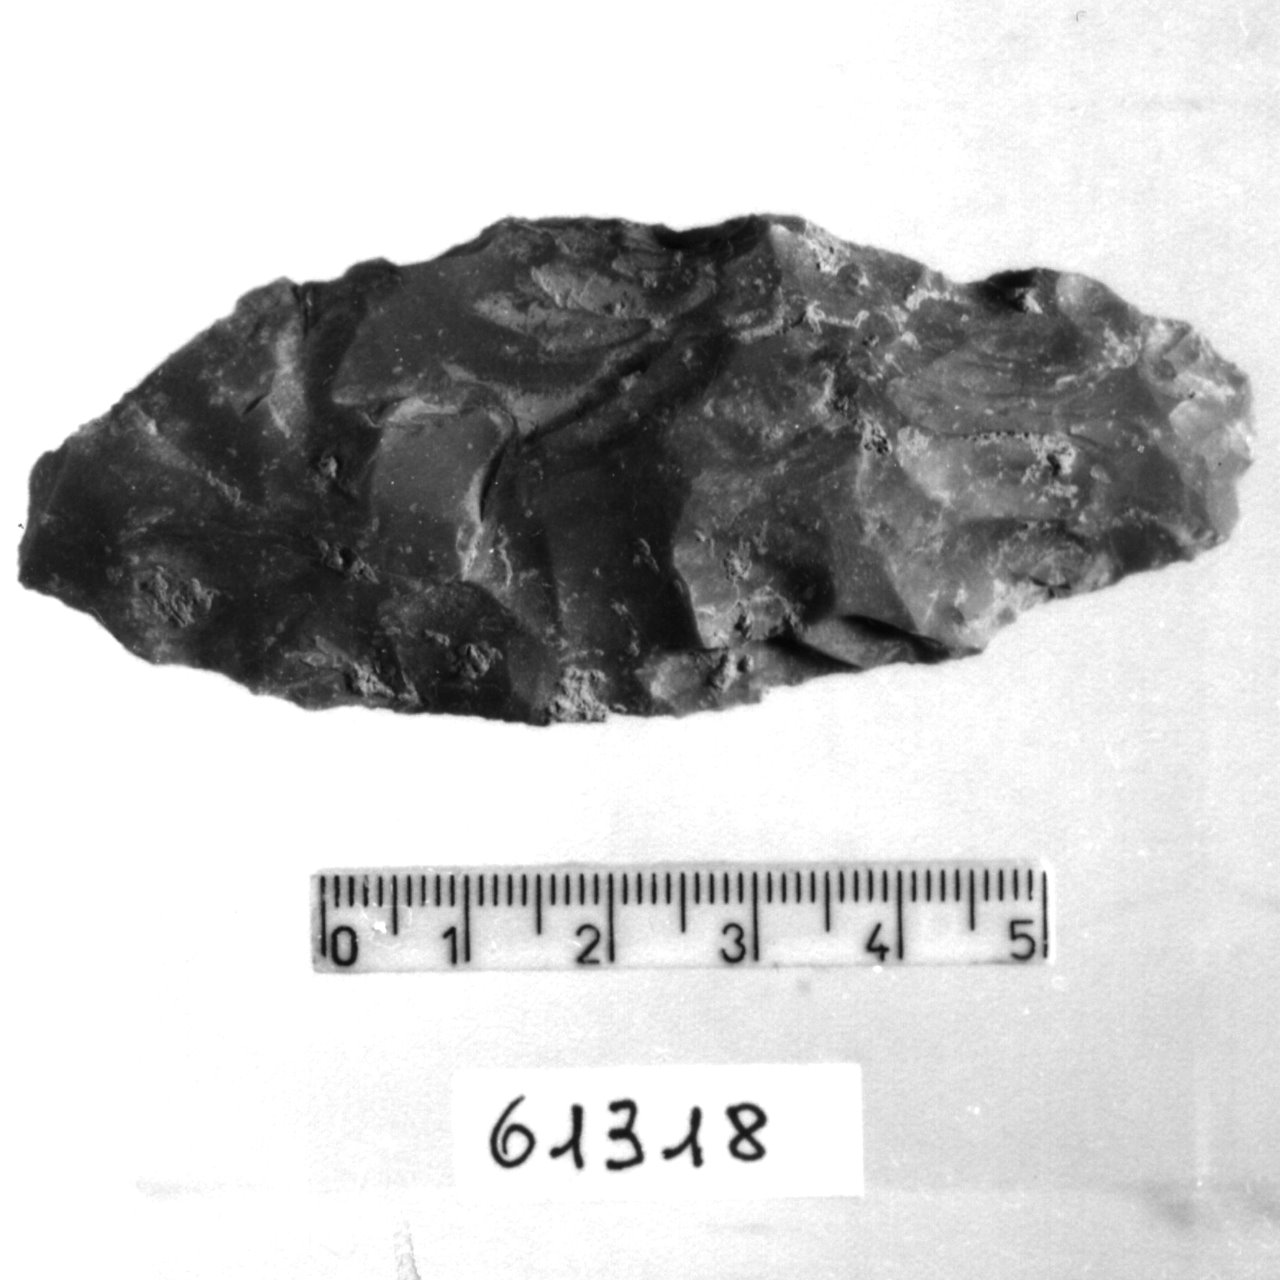 punta foliata bifacciale - tecnica campignana (Eneolitico)